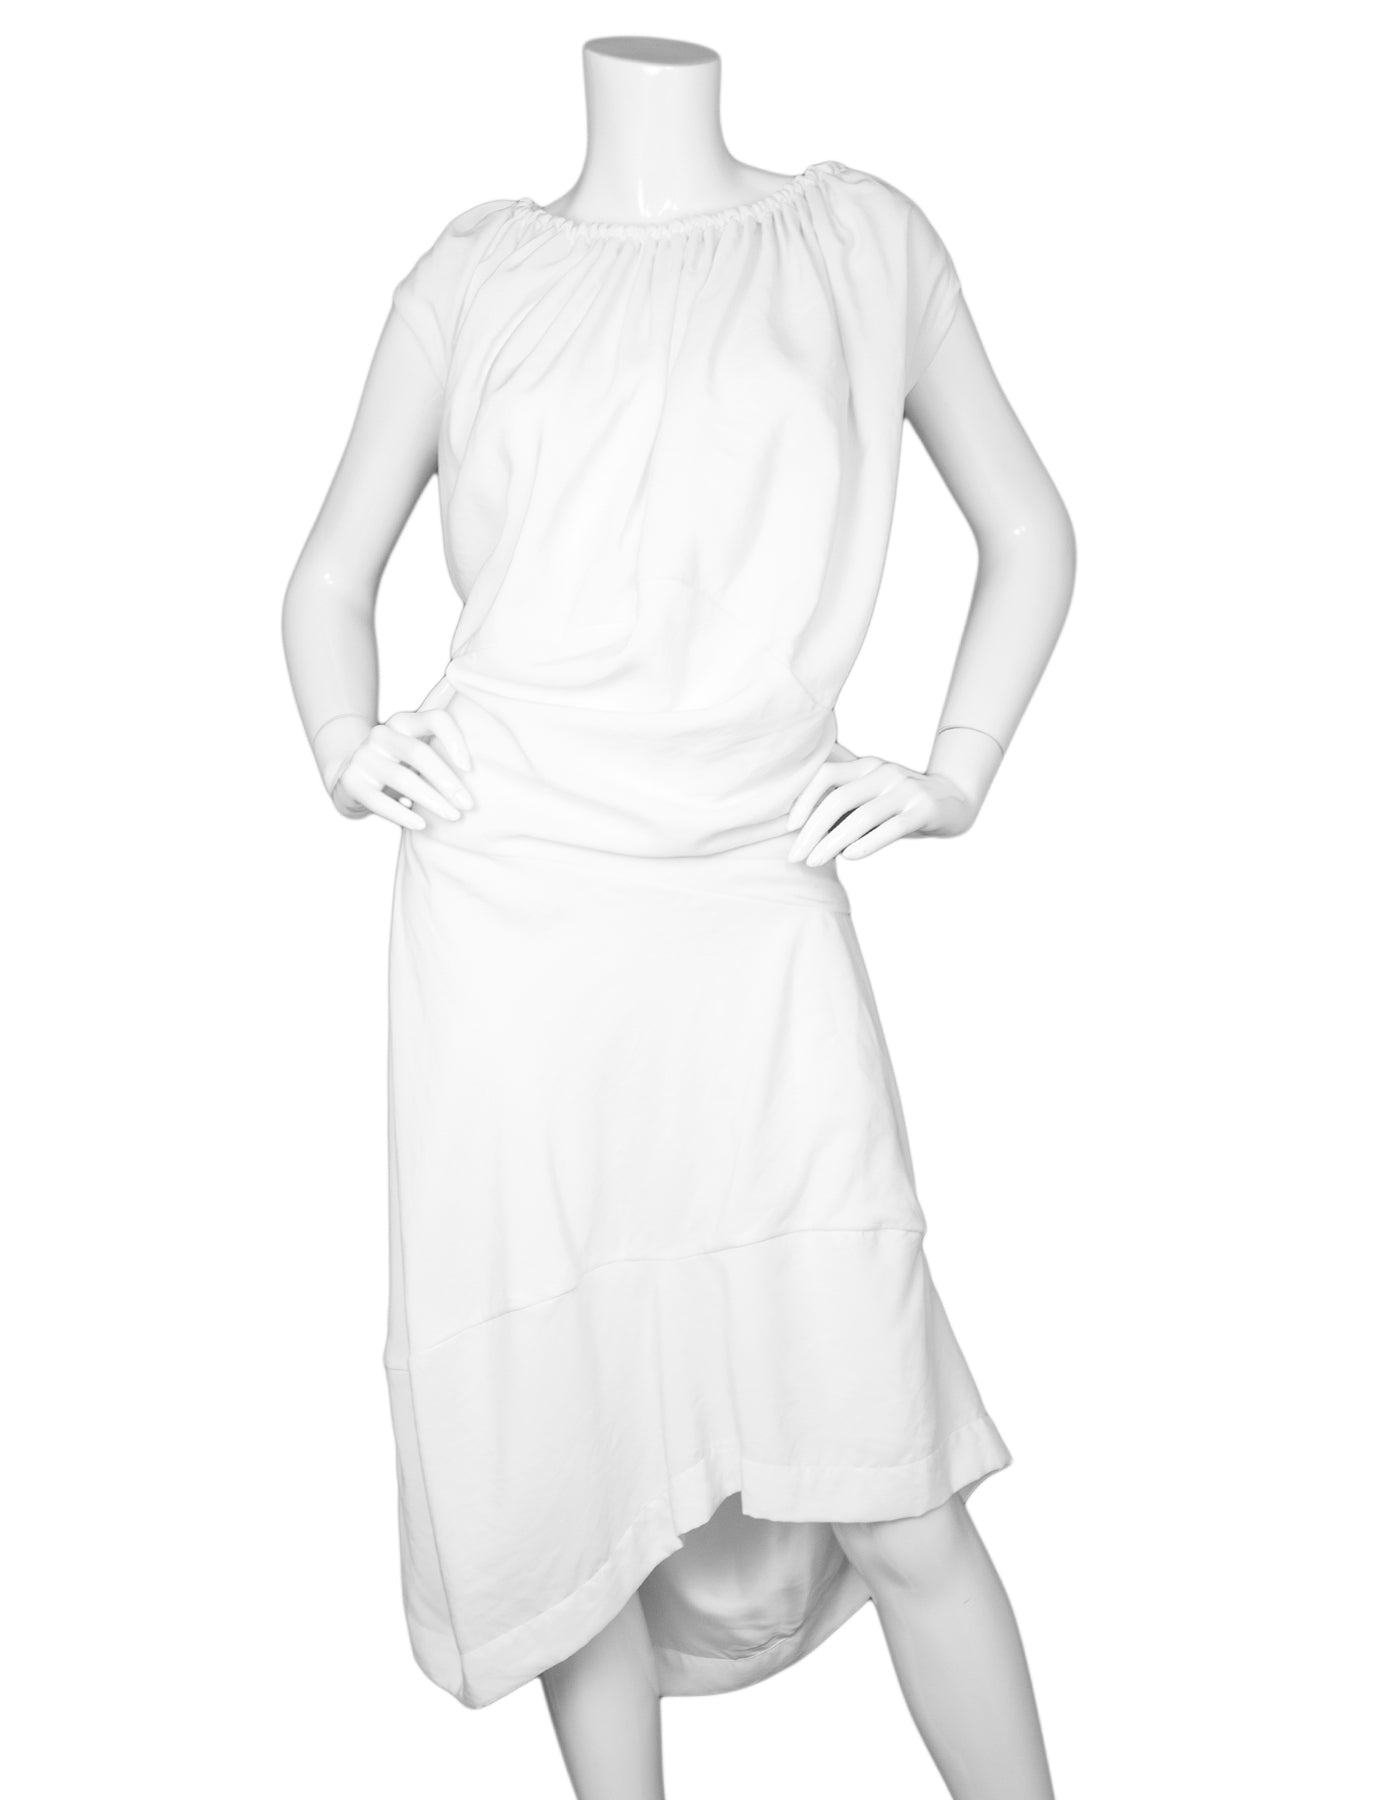 Vivienne Westwood Red Label White Asymmetrical Dress Sz IT40